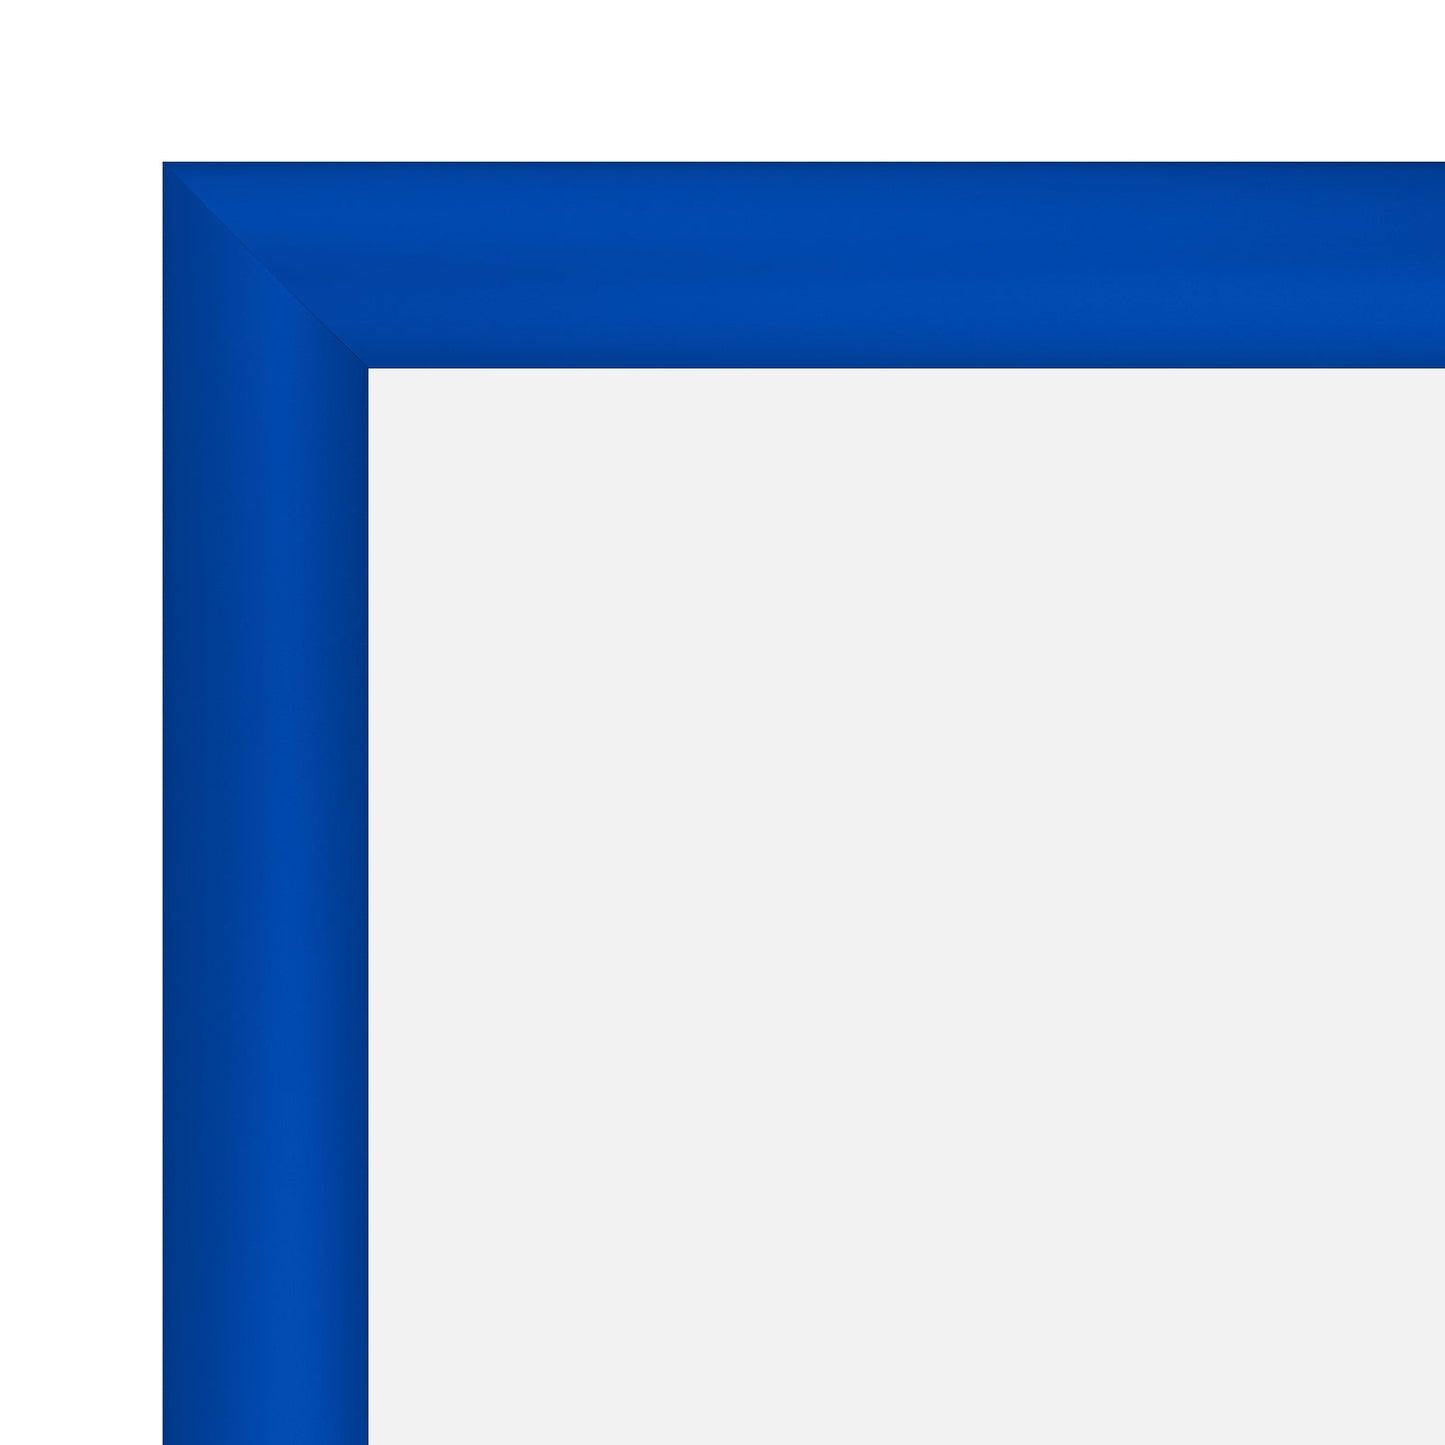 10x13 Blue SnapeZo® Snap Frame - 1.2" Profile